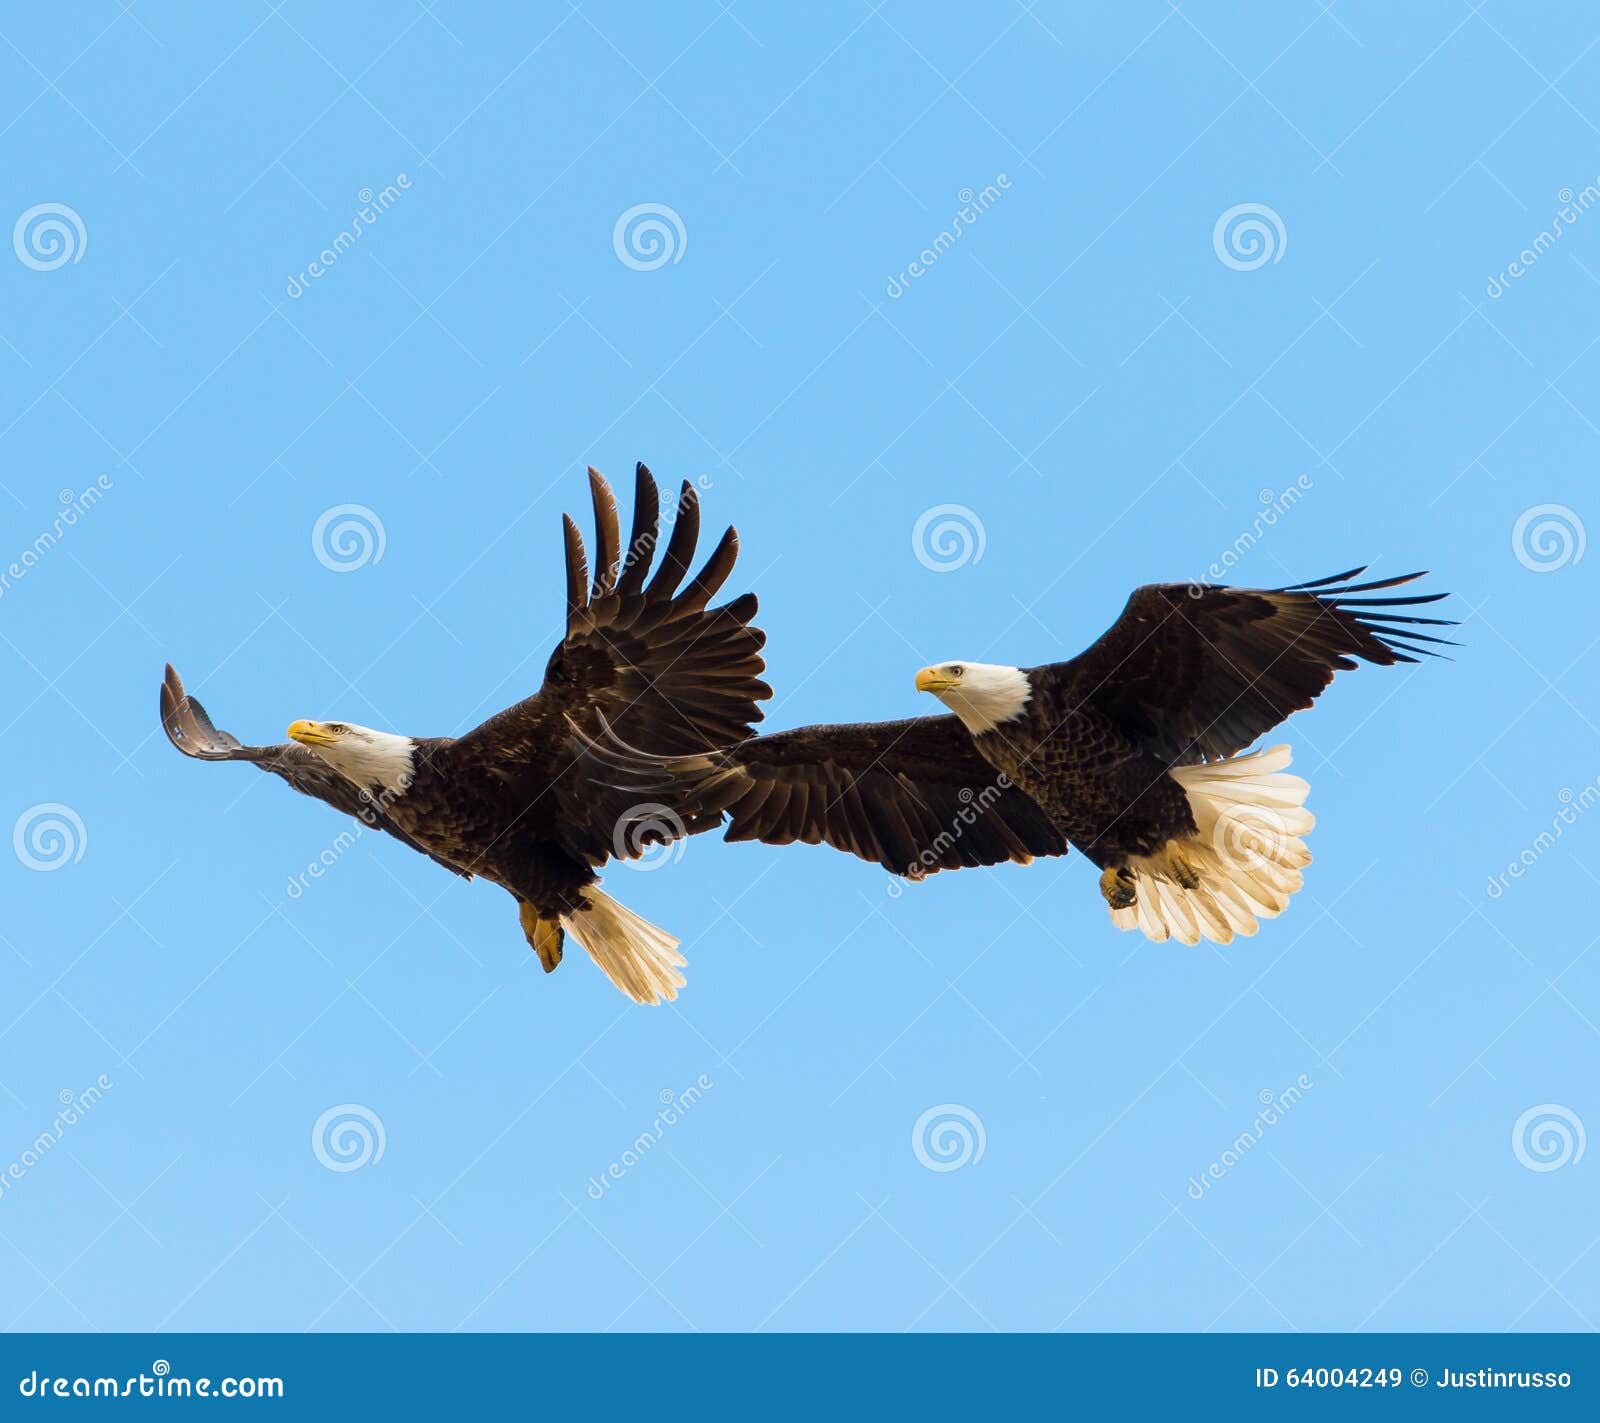 bald eagles in flight